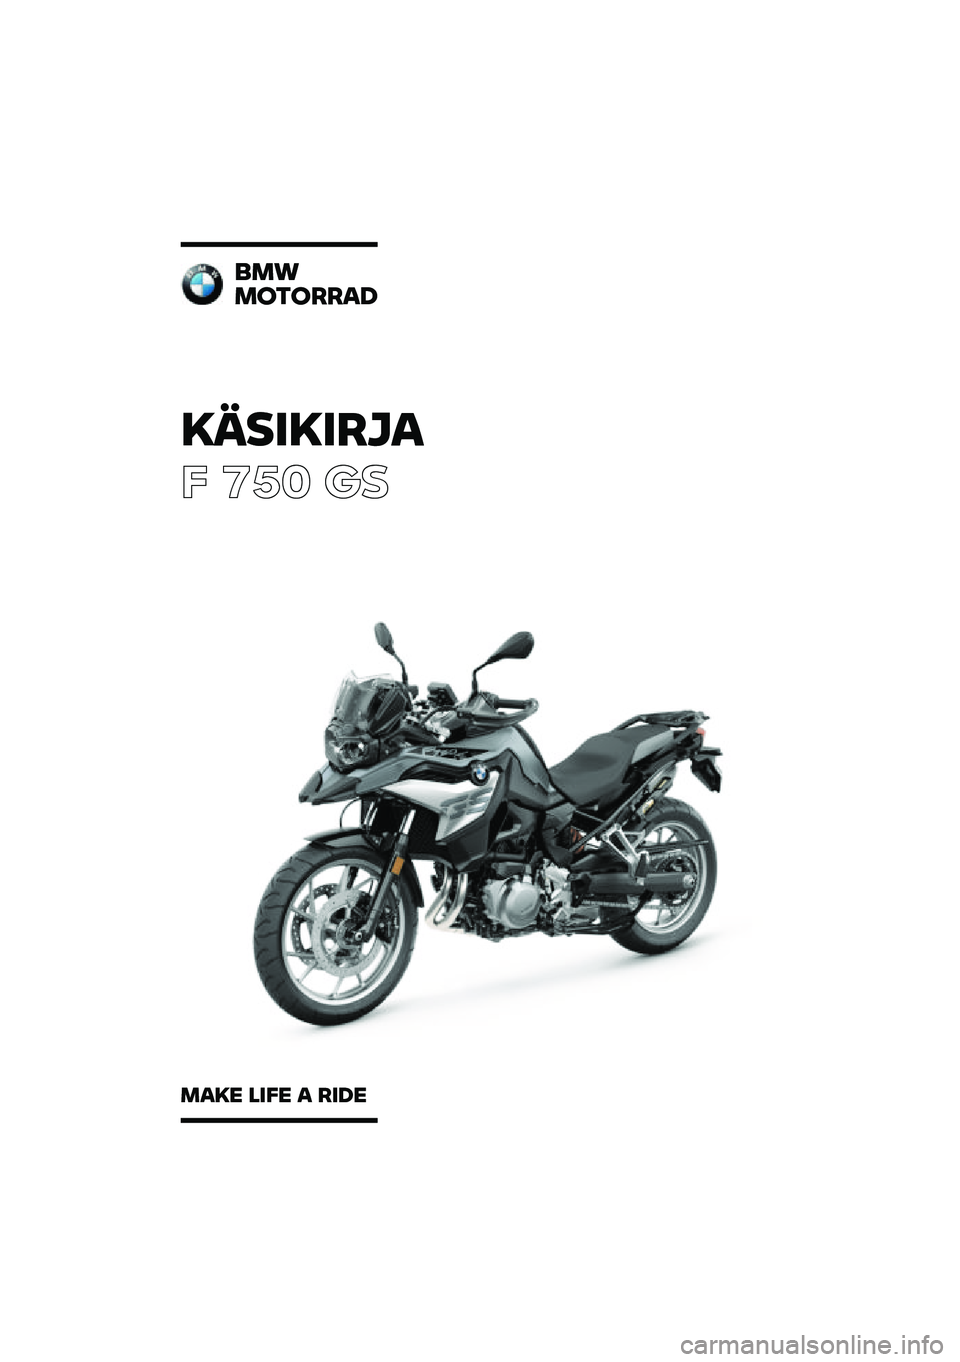 BMW MOTORRAD F 750 GS 2020  Käsikirja (in Finnish) 